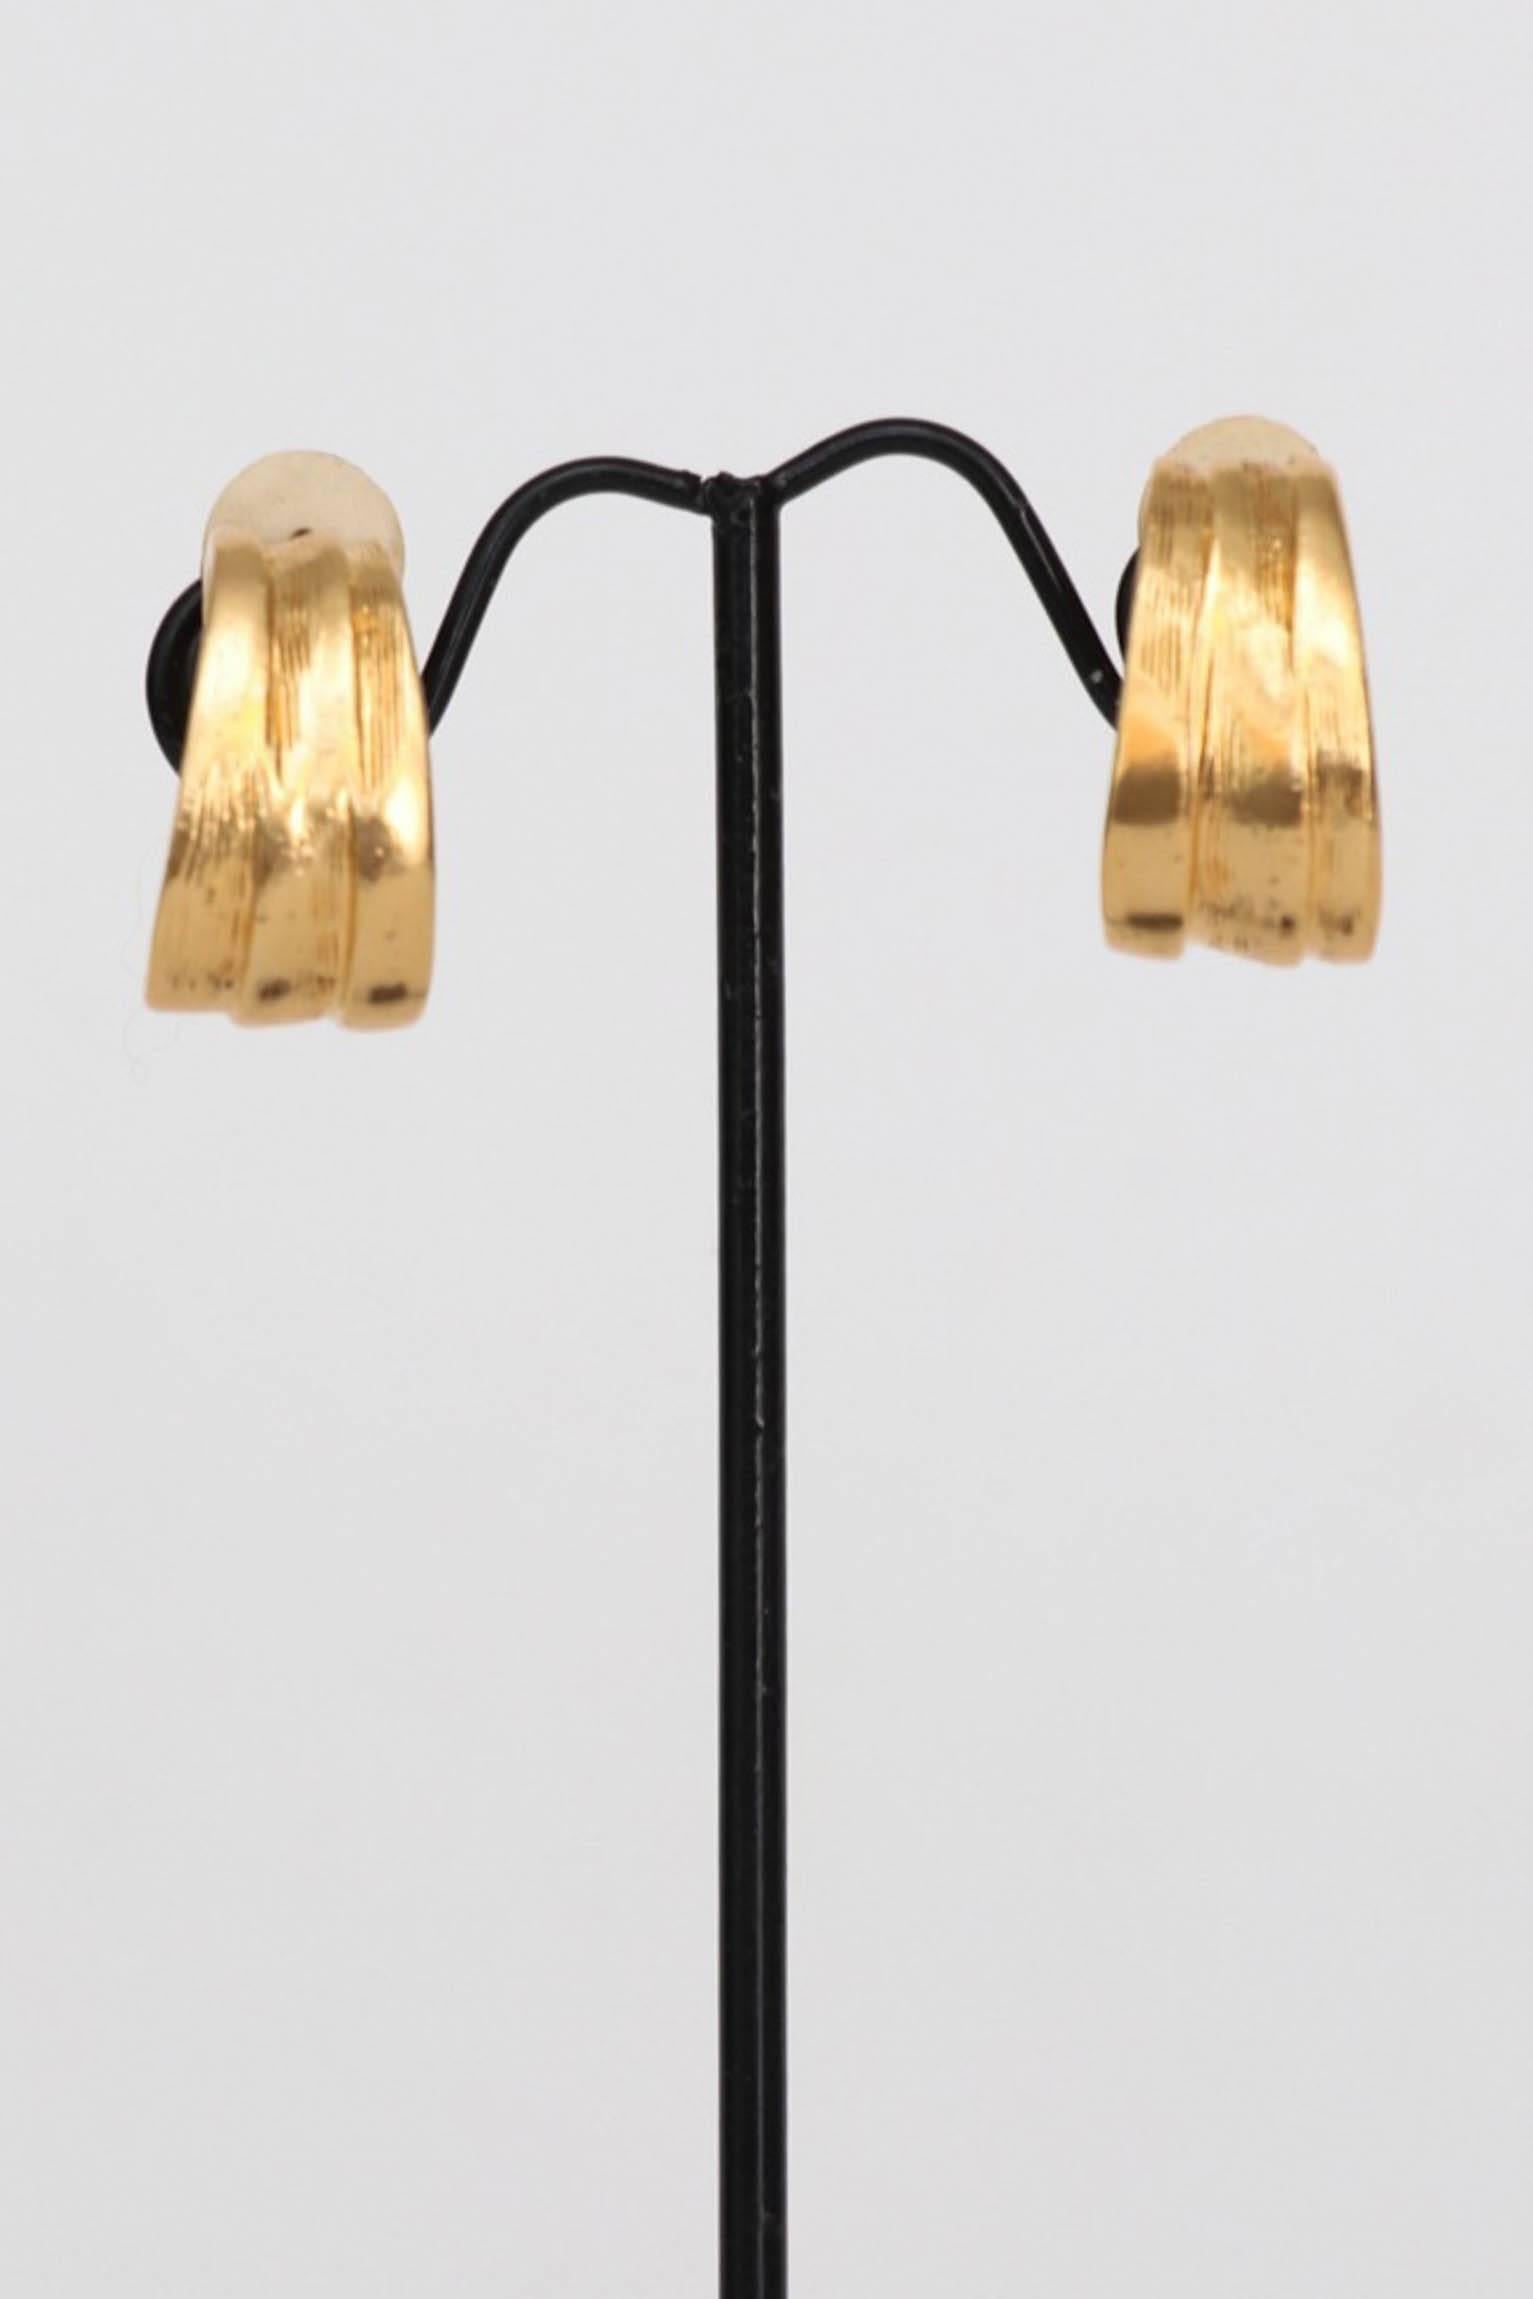 Yves Saint Laurent Gold Plated Clip On Earrings, 1980s  For Sale 2